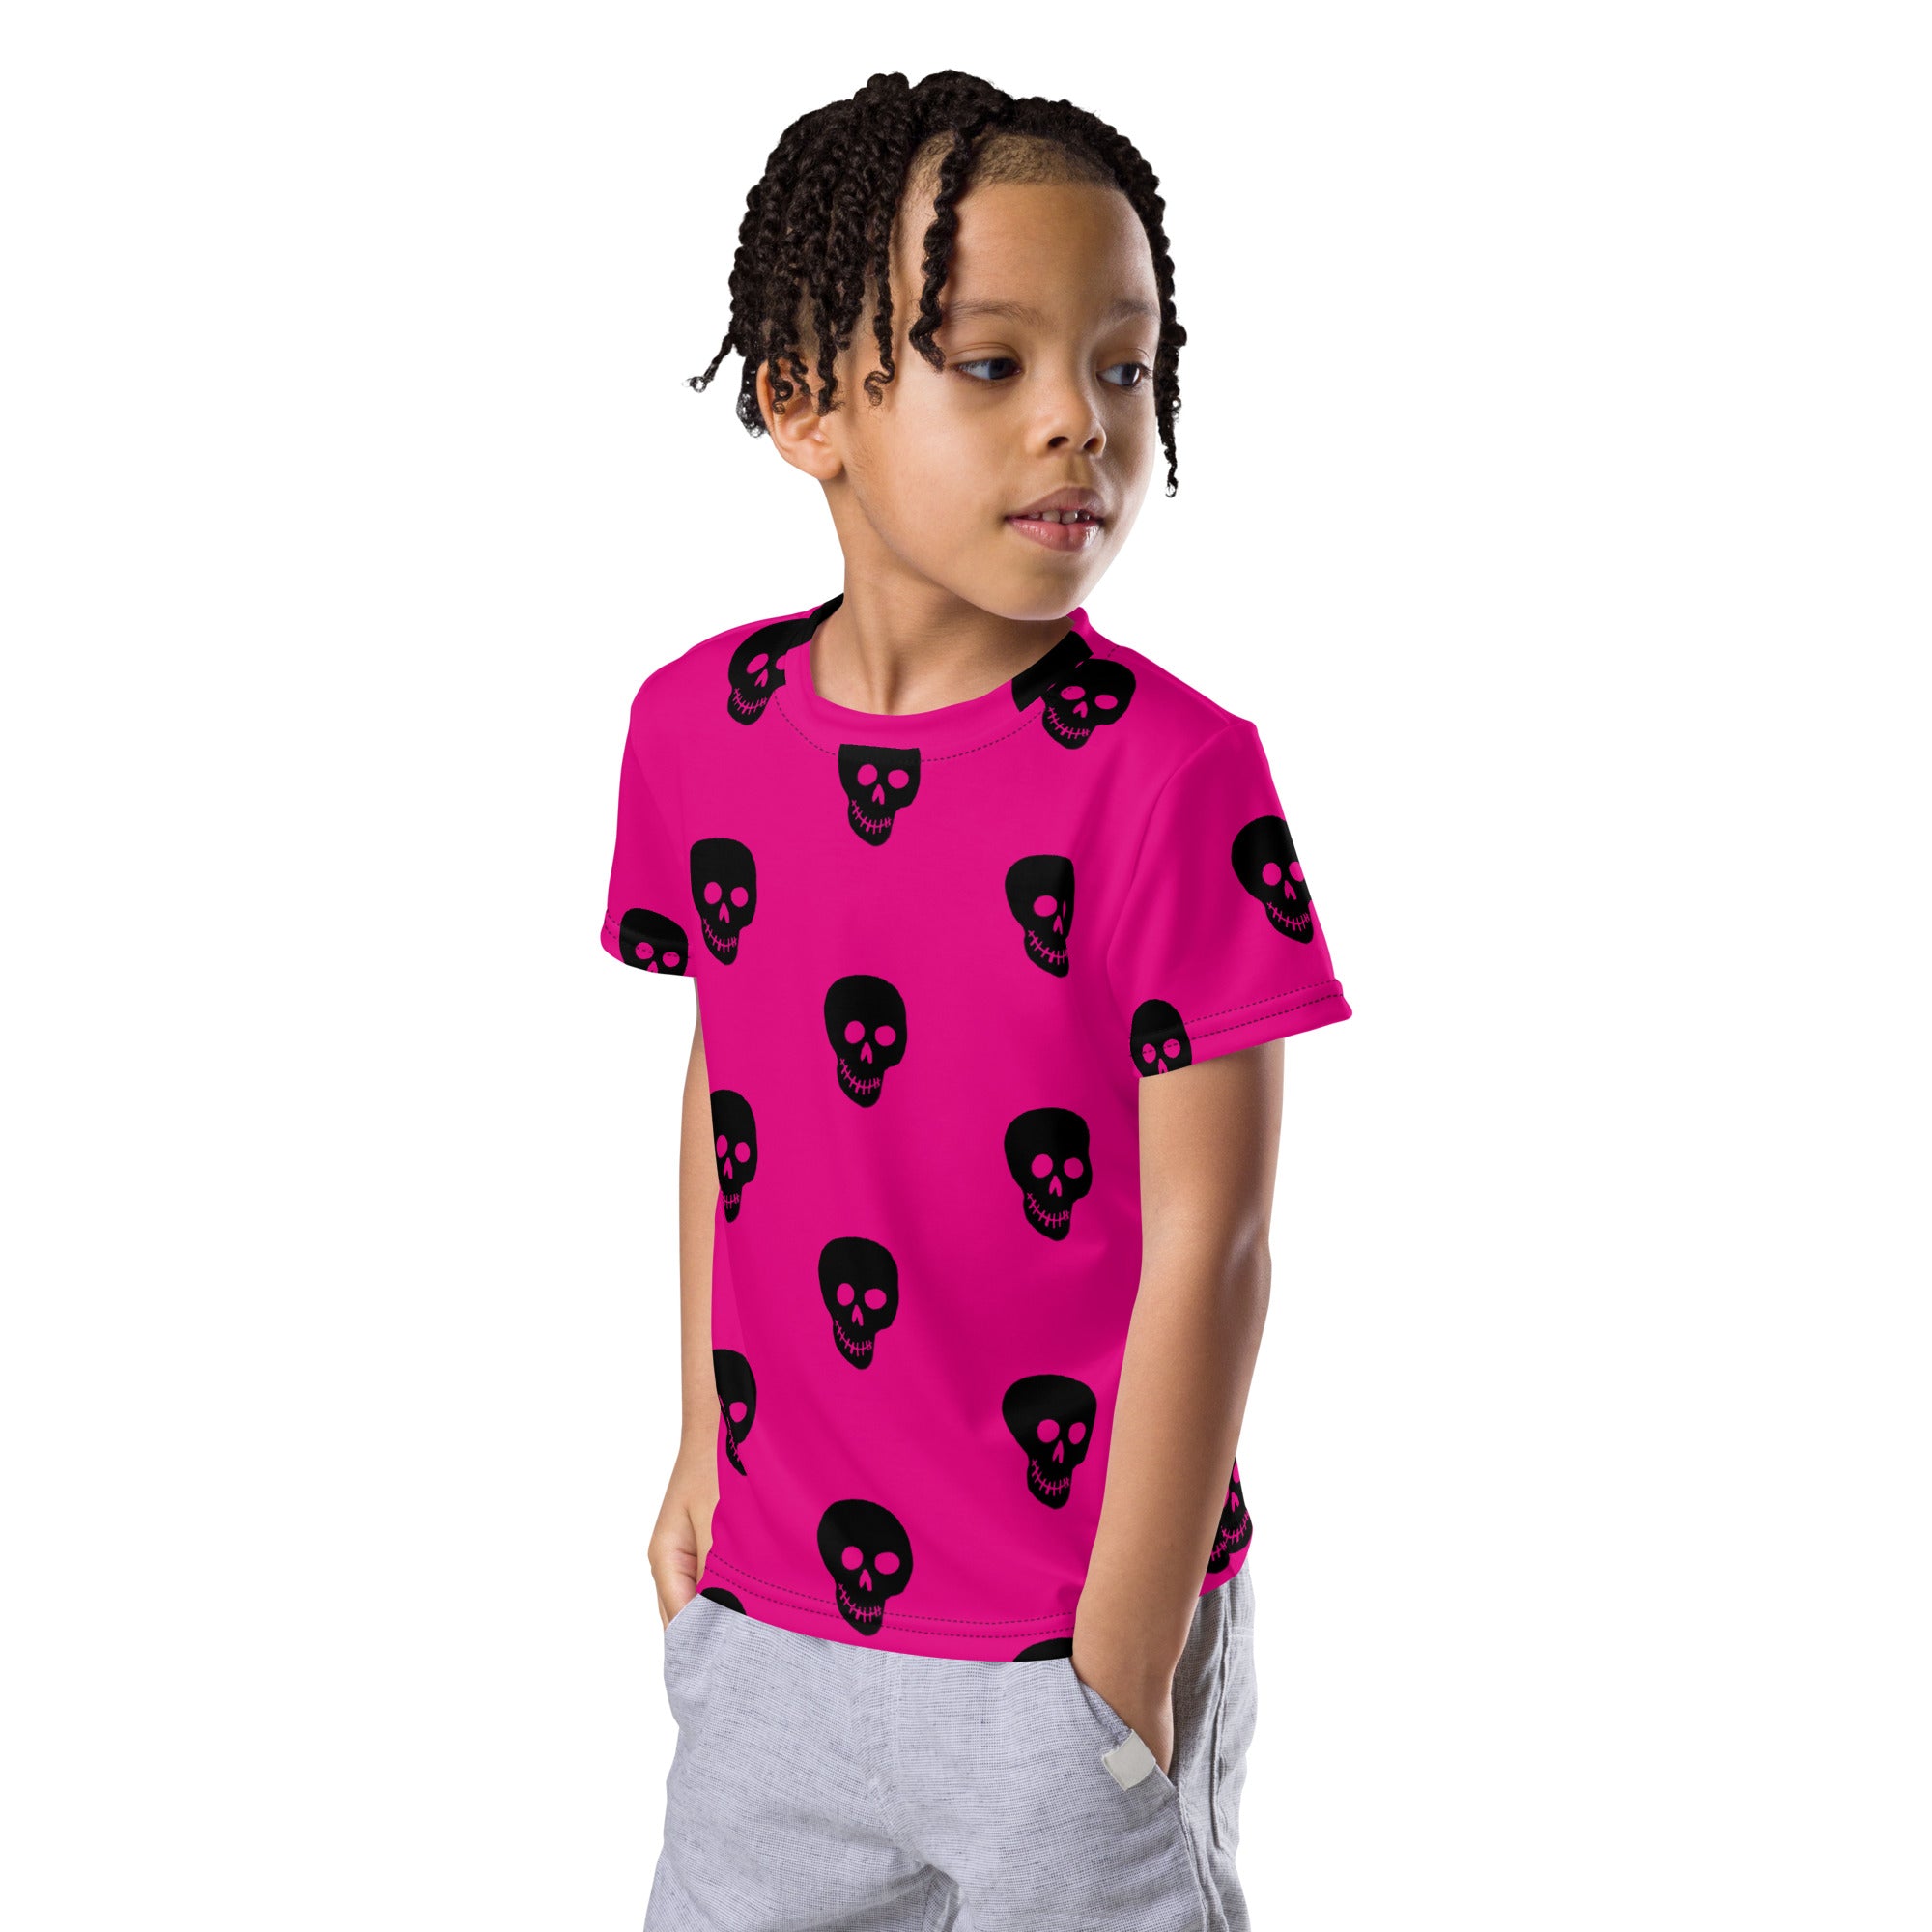 Pink! black skulls Kids crew neck t-shirt